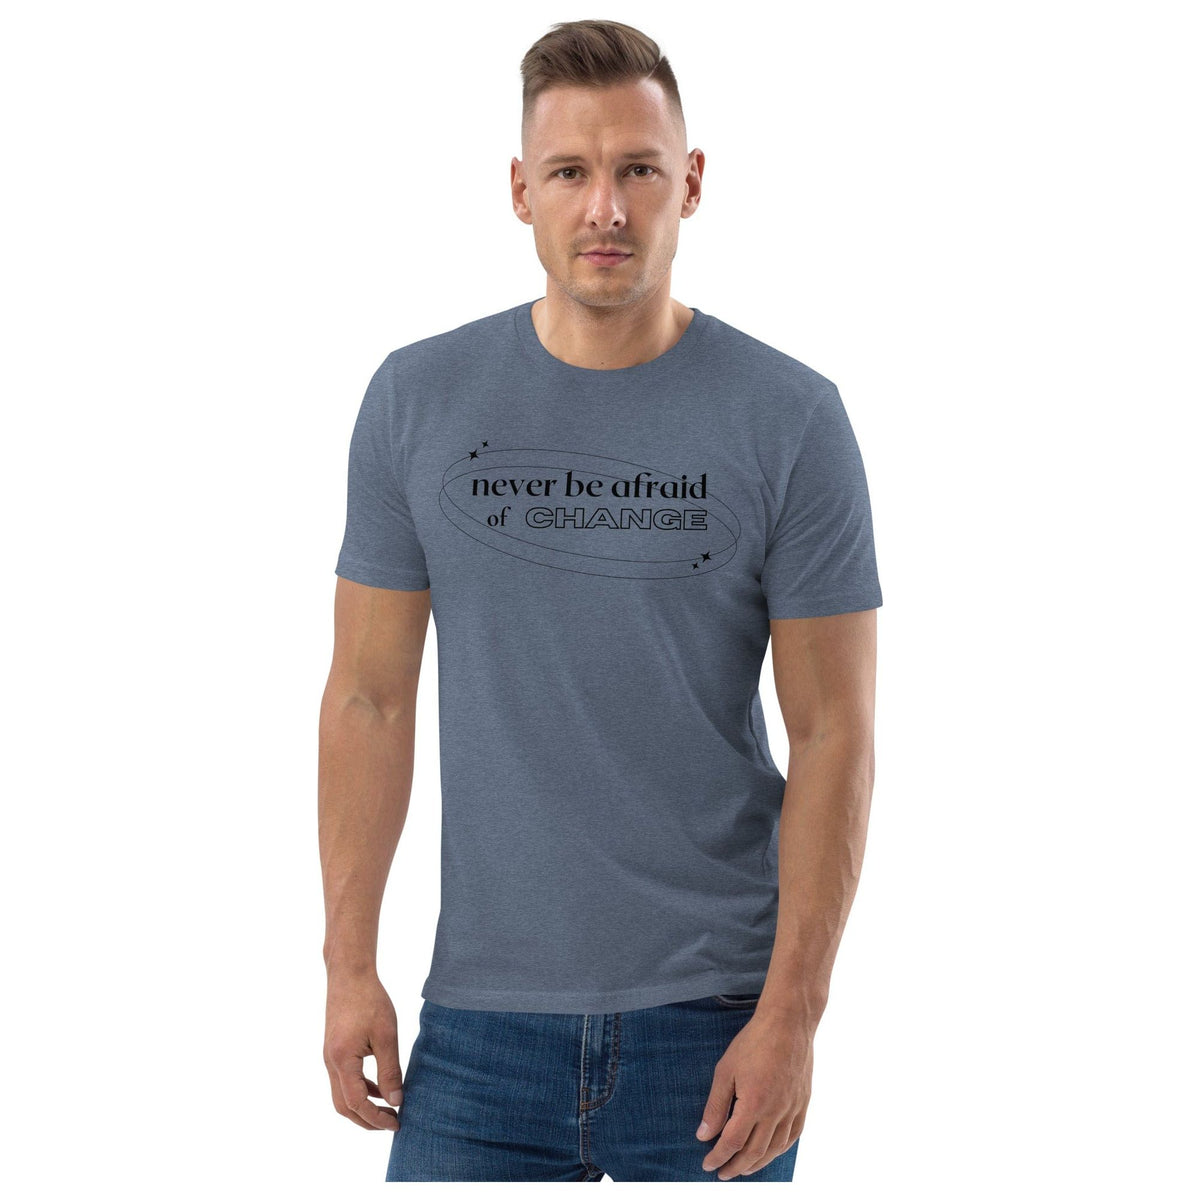 Karma Kiss T Shirt Never Be Afraid of Change - Unisex Organic Cotton T-Shirt